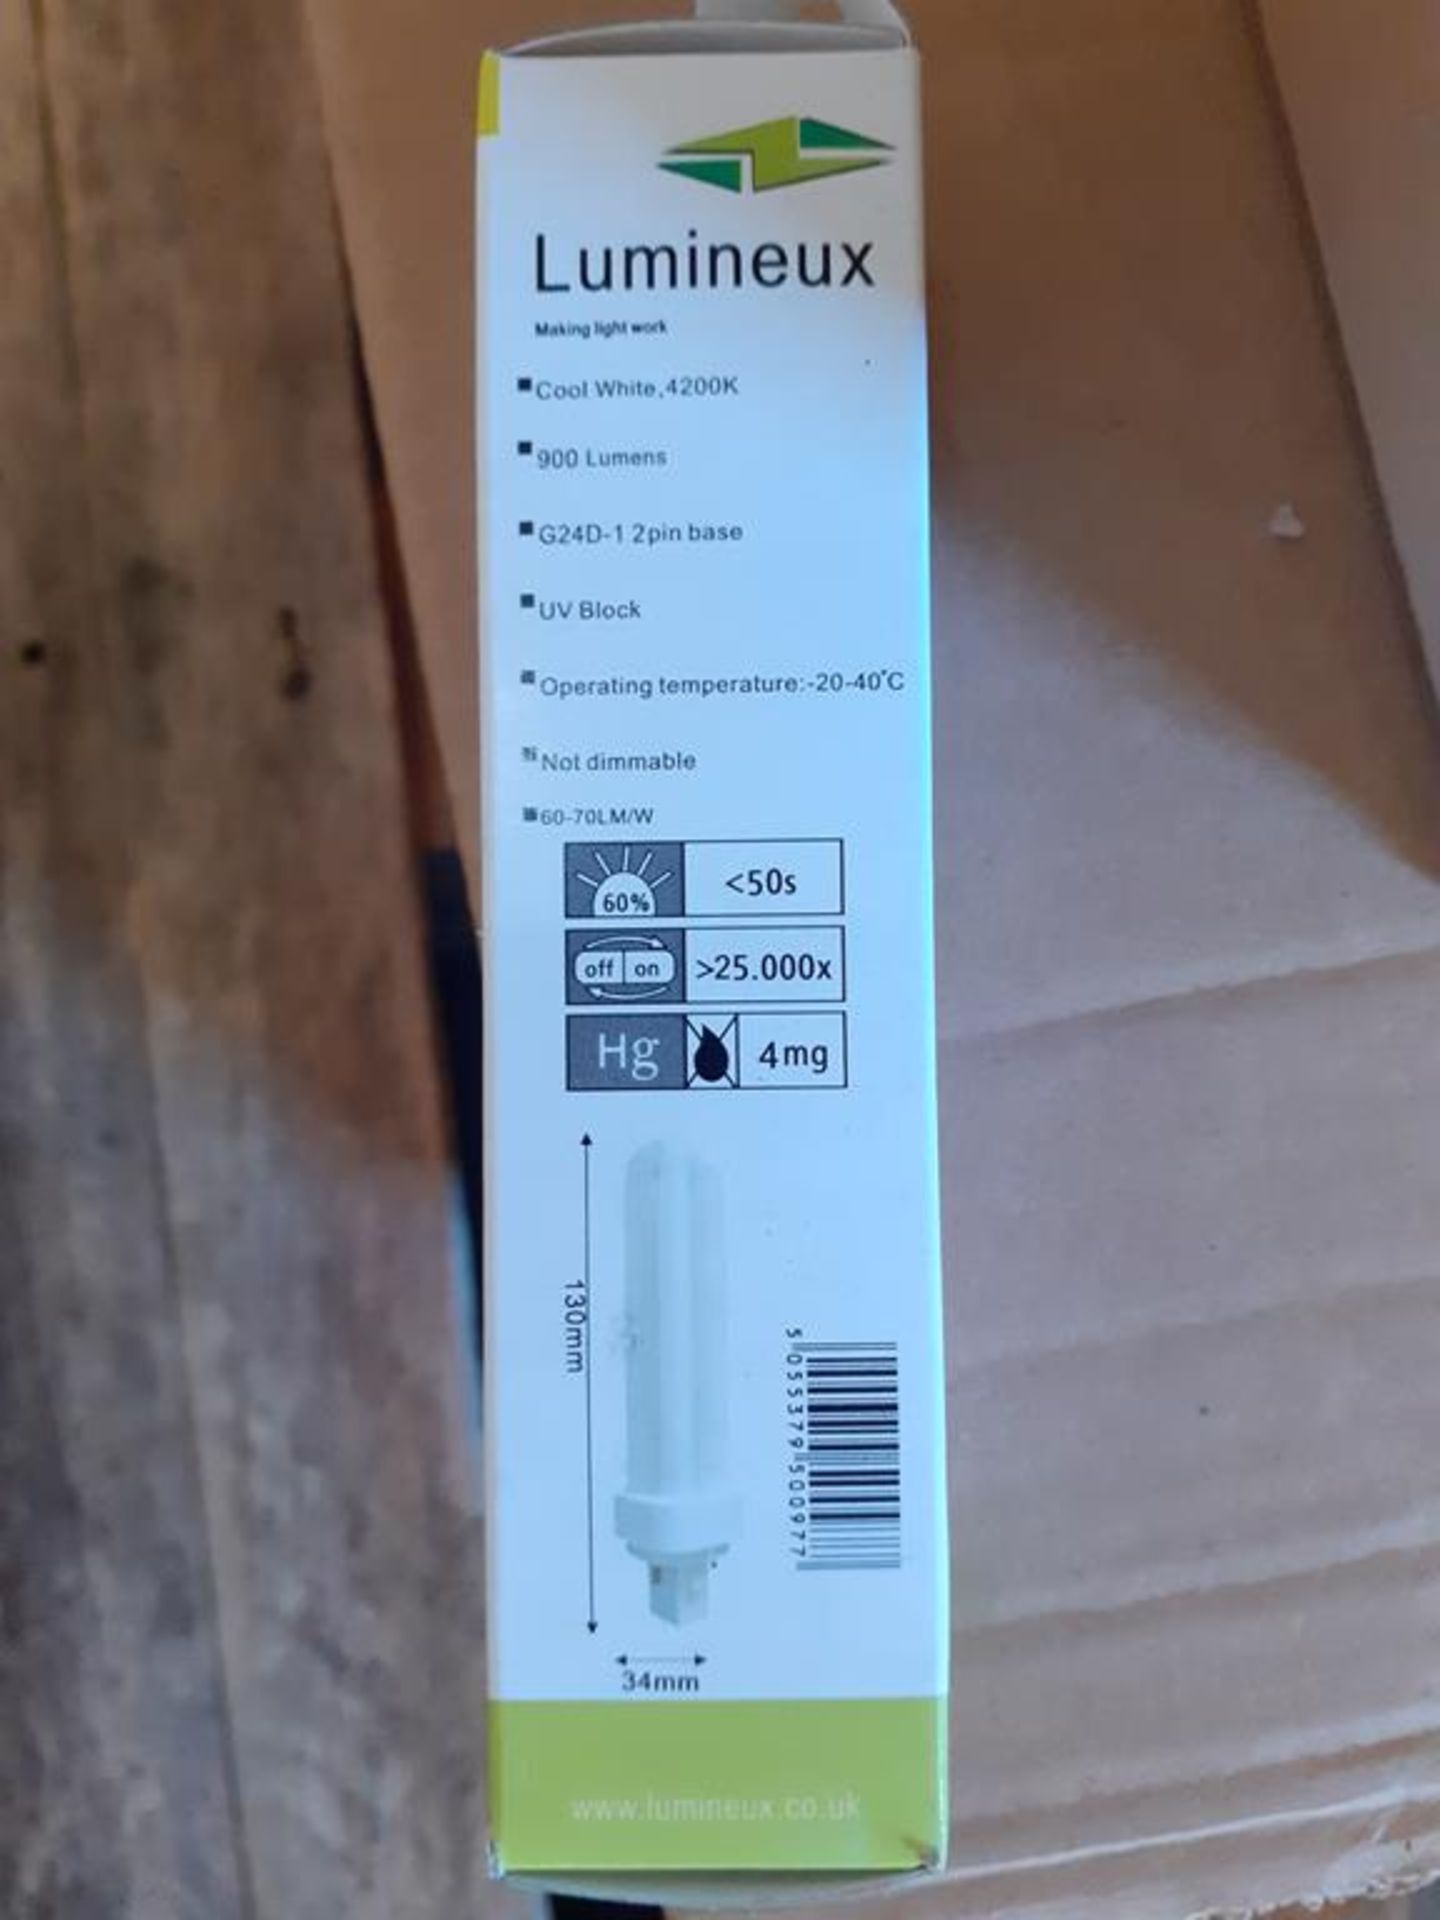 3x boxes of Lumineux PLC Compact 13W G24D-1 2U 2Pin 4200K Cool White Fluorescent Bulbs (100pcs per b - Image 5 of 5